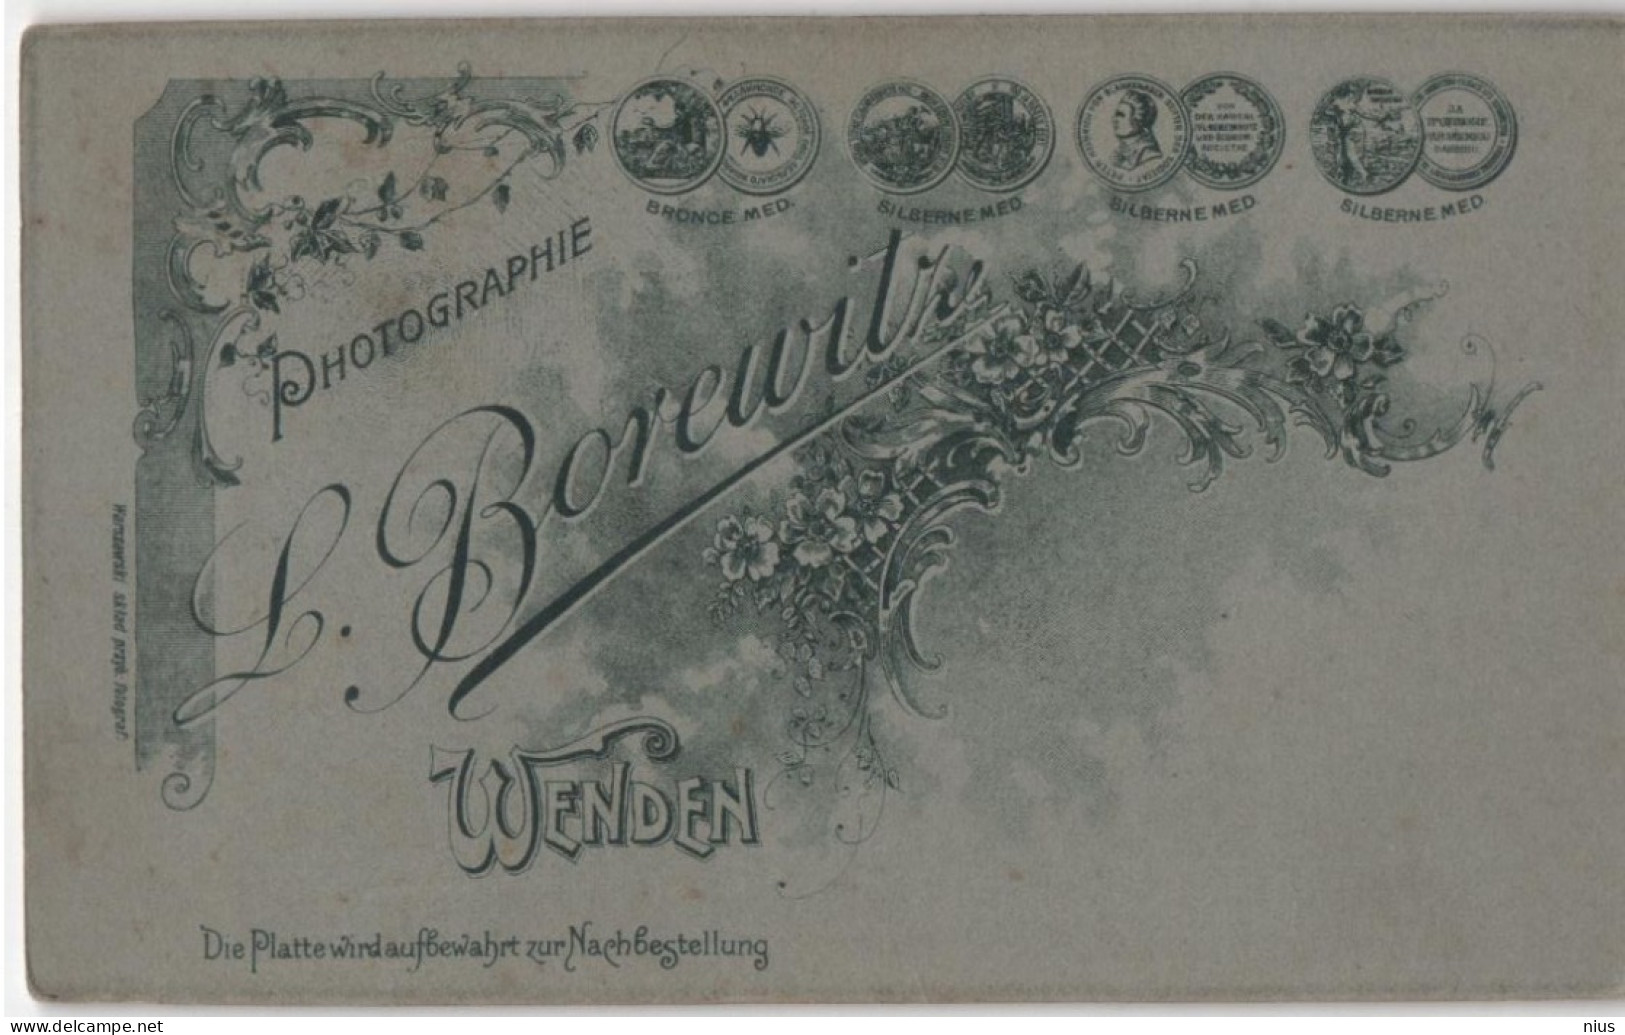 Latvia Latvija 1905 Wenden Venden Cesis Zehsis Zehses, Visit Cabinet Small Card - Lettland